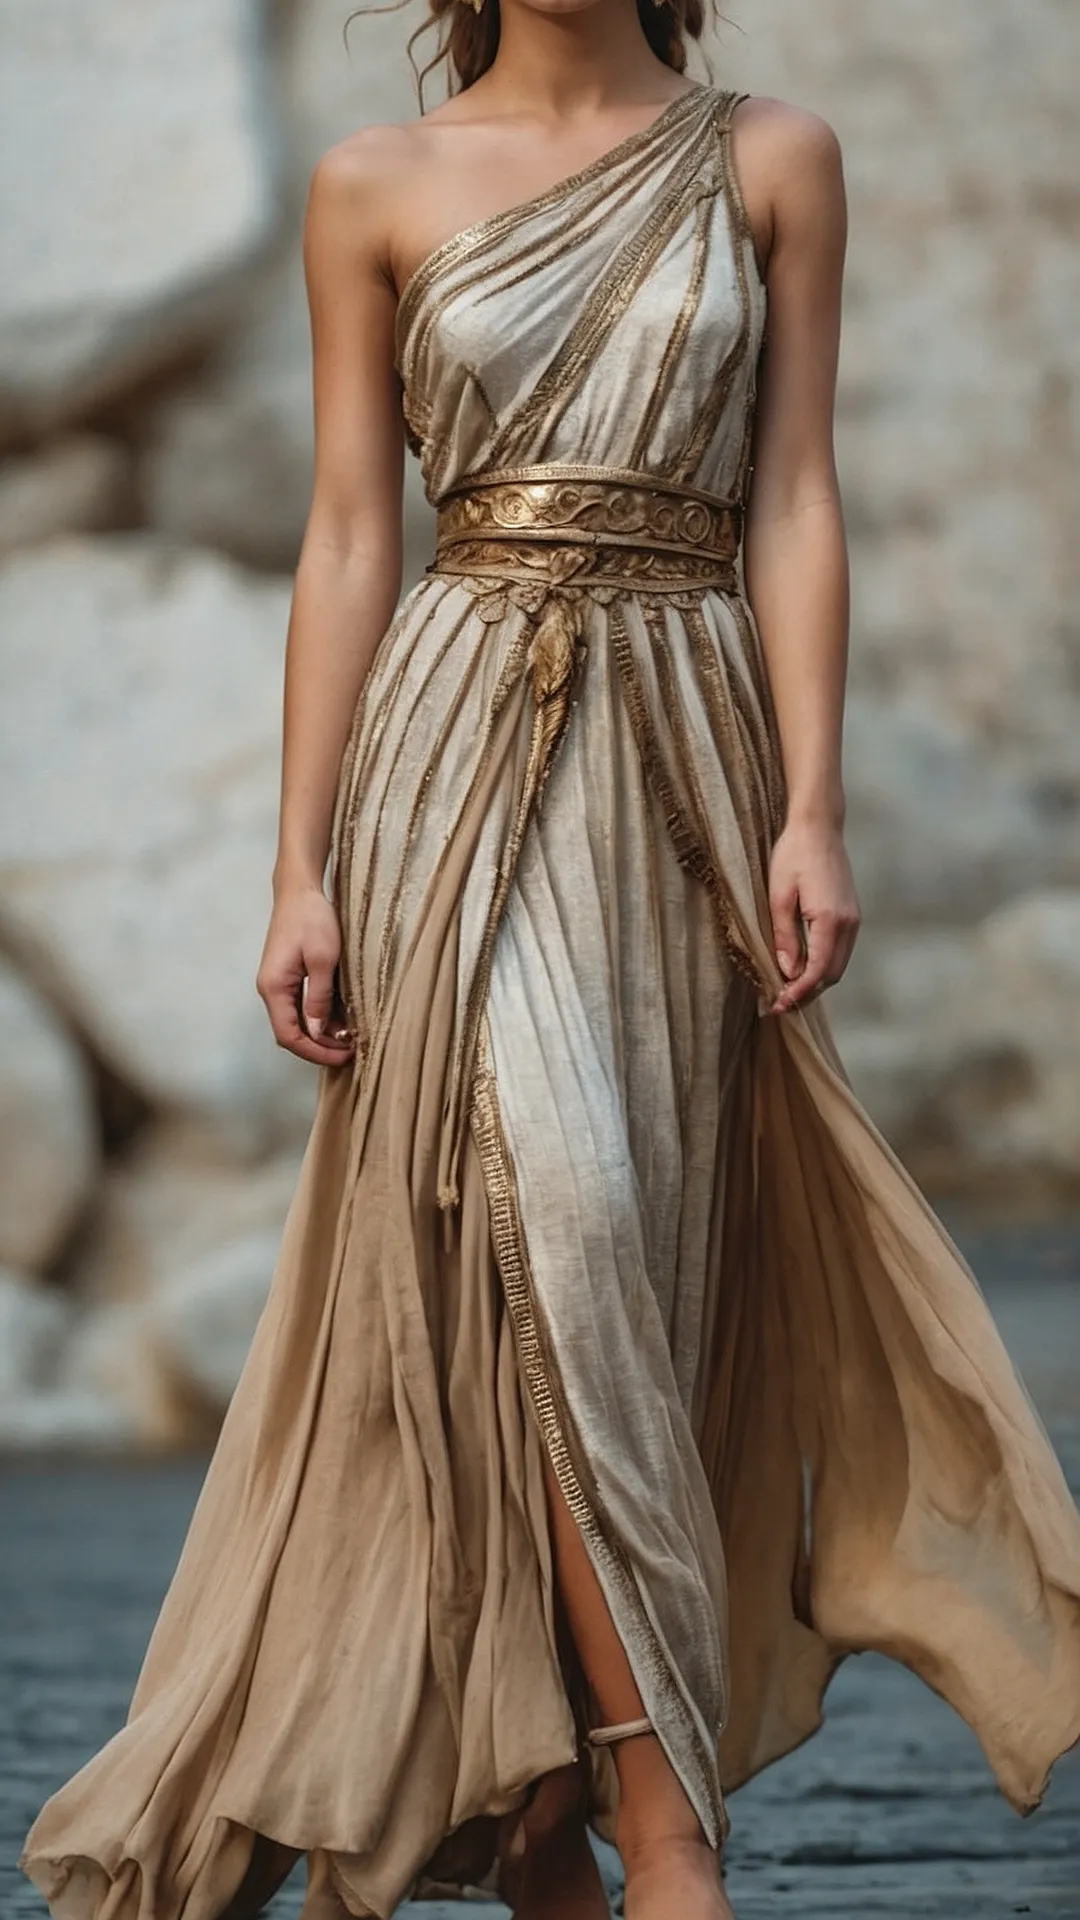 Goddess Glow-Up: Transformative Greek Dress Styles